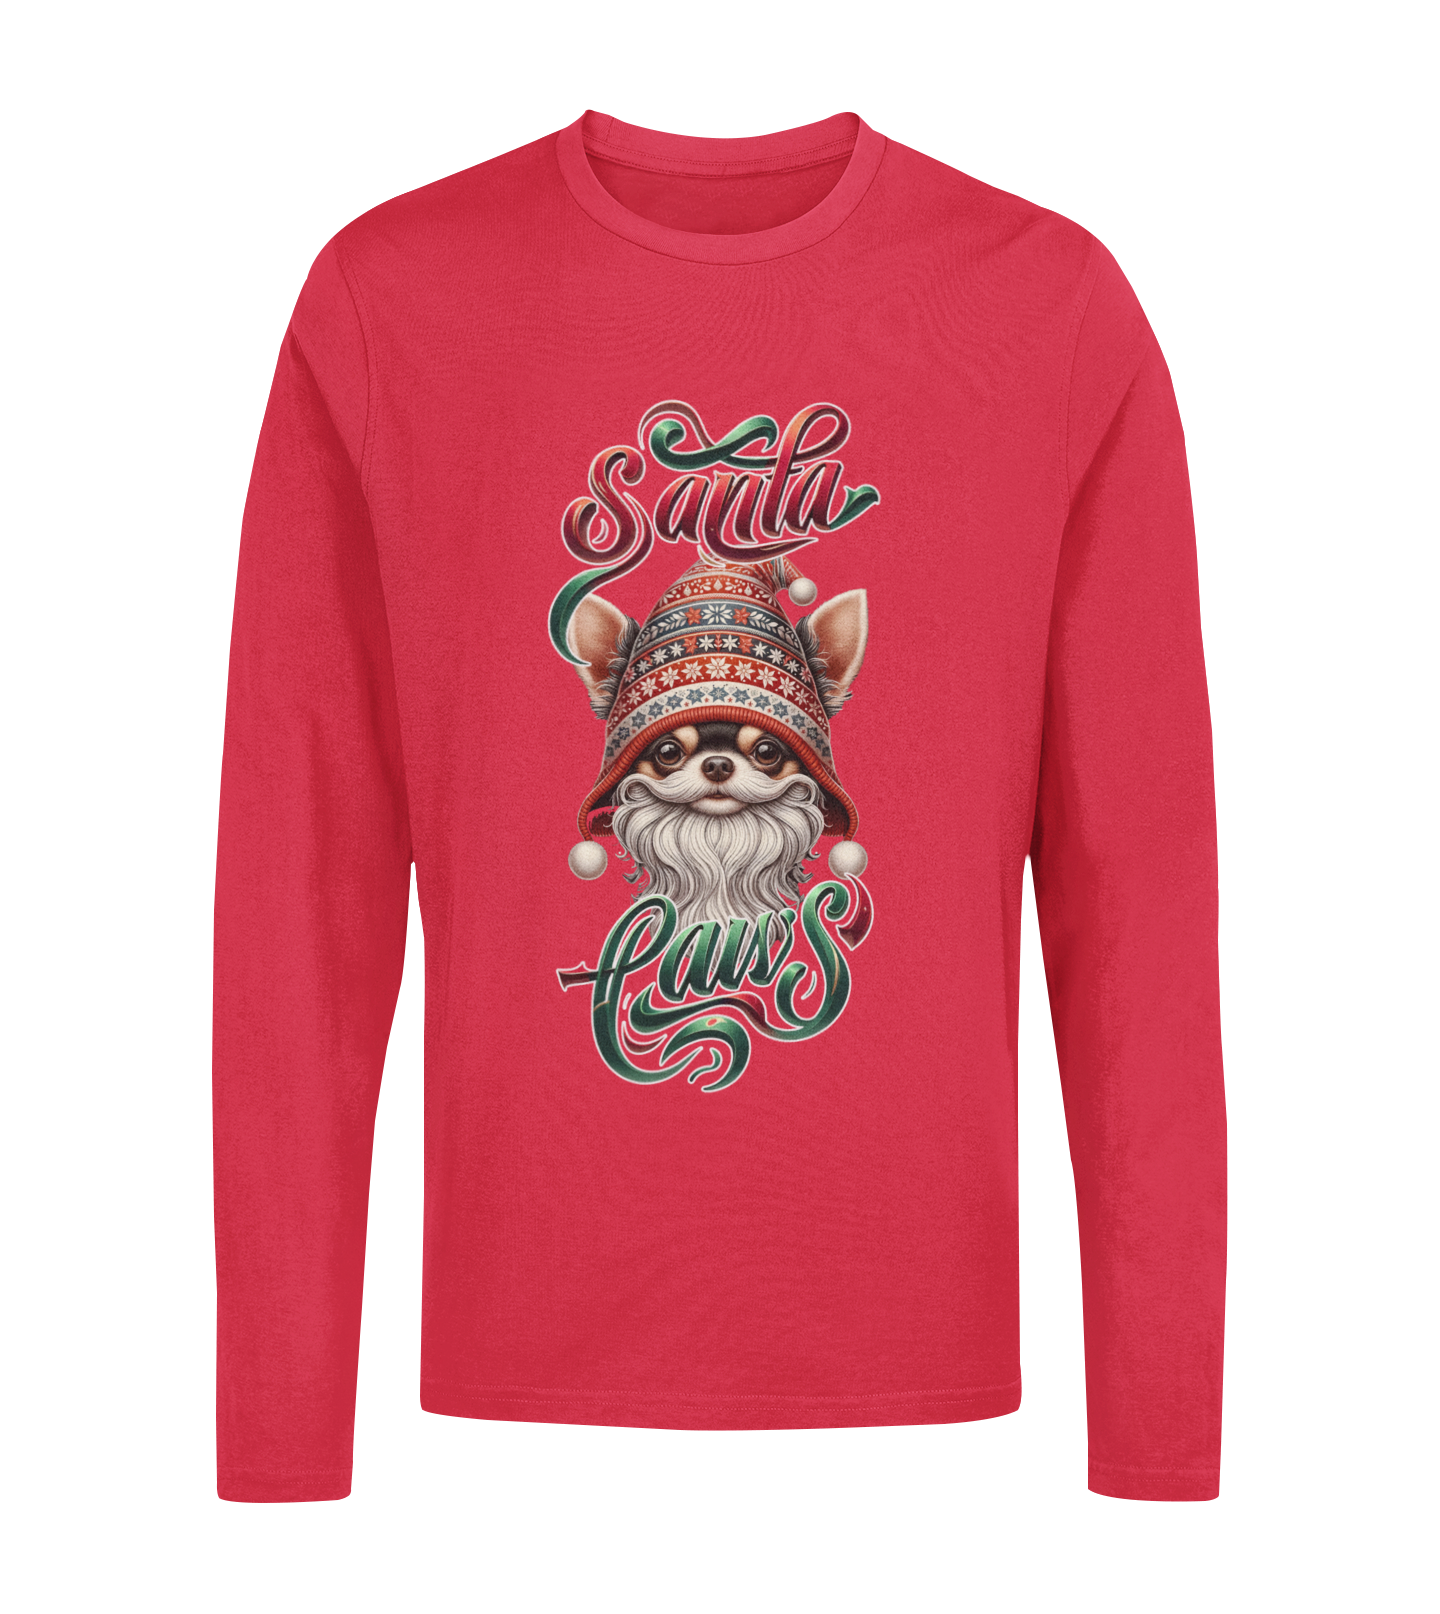 Santa Paws Long Sleeve Tee -Chihuahua Design - 100% Cotton - USA Made - Holiday Party Favorites